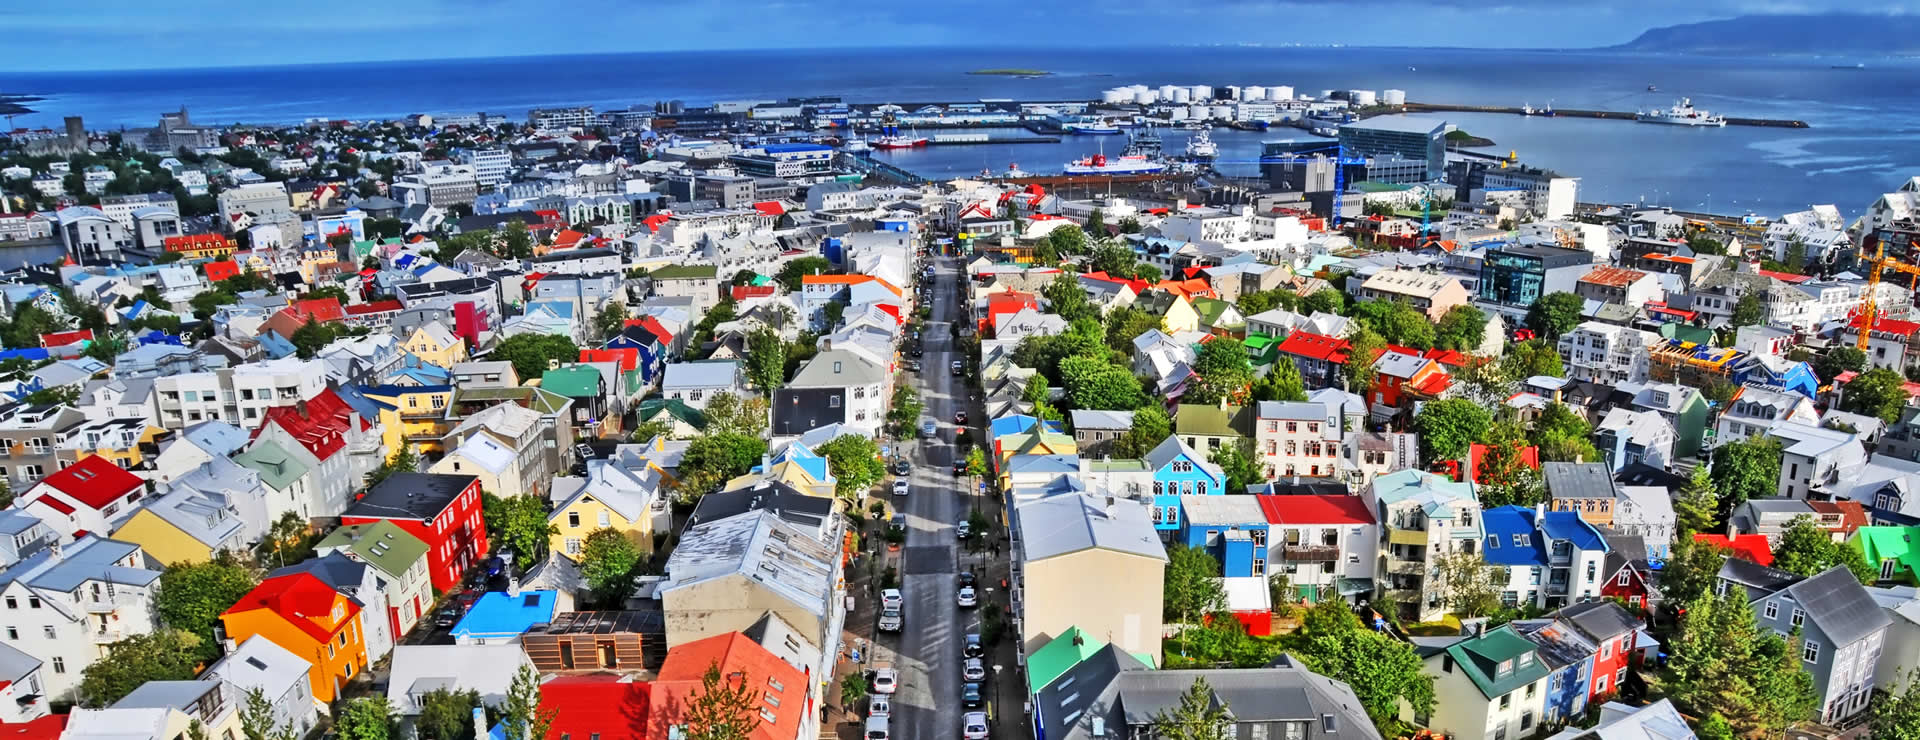 Reykjavik city and port